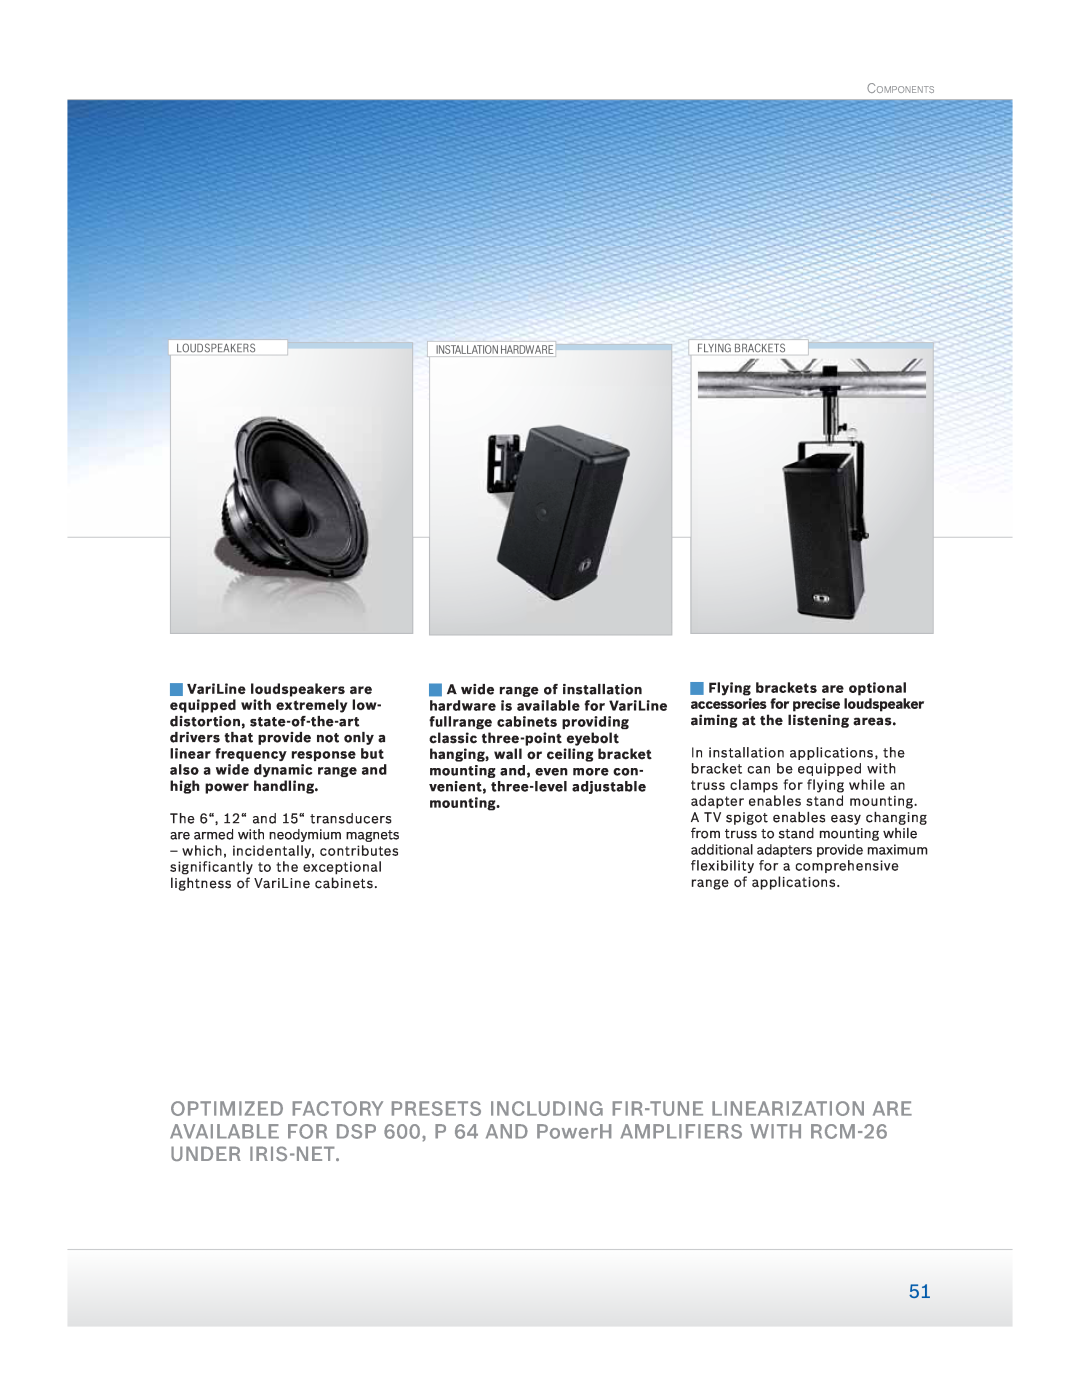 Dynacord Speaker manual Under Iris-Net, Loudspeakers, Installation Hardware, Flying Brackets 